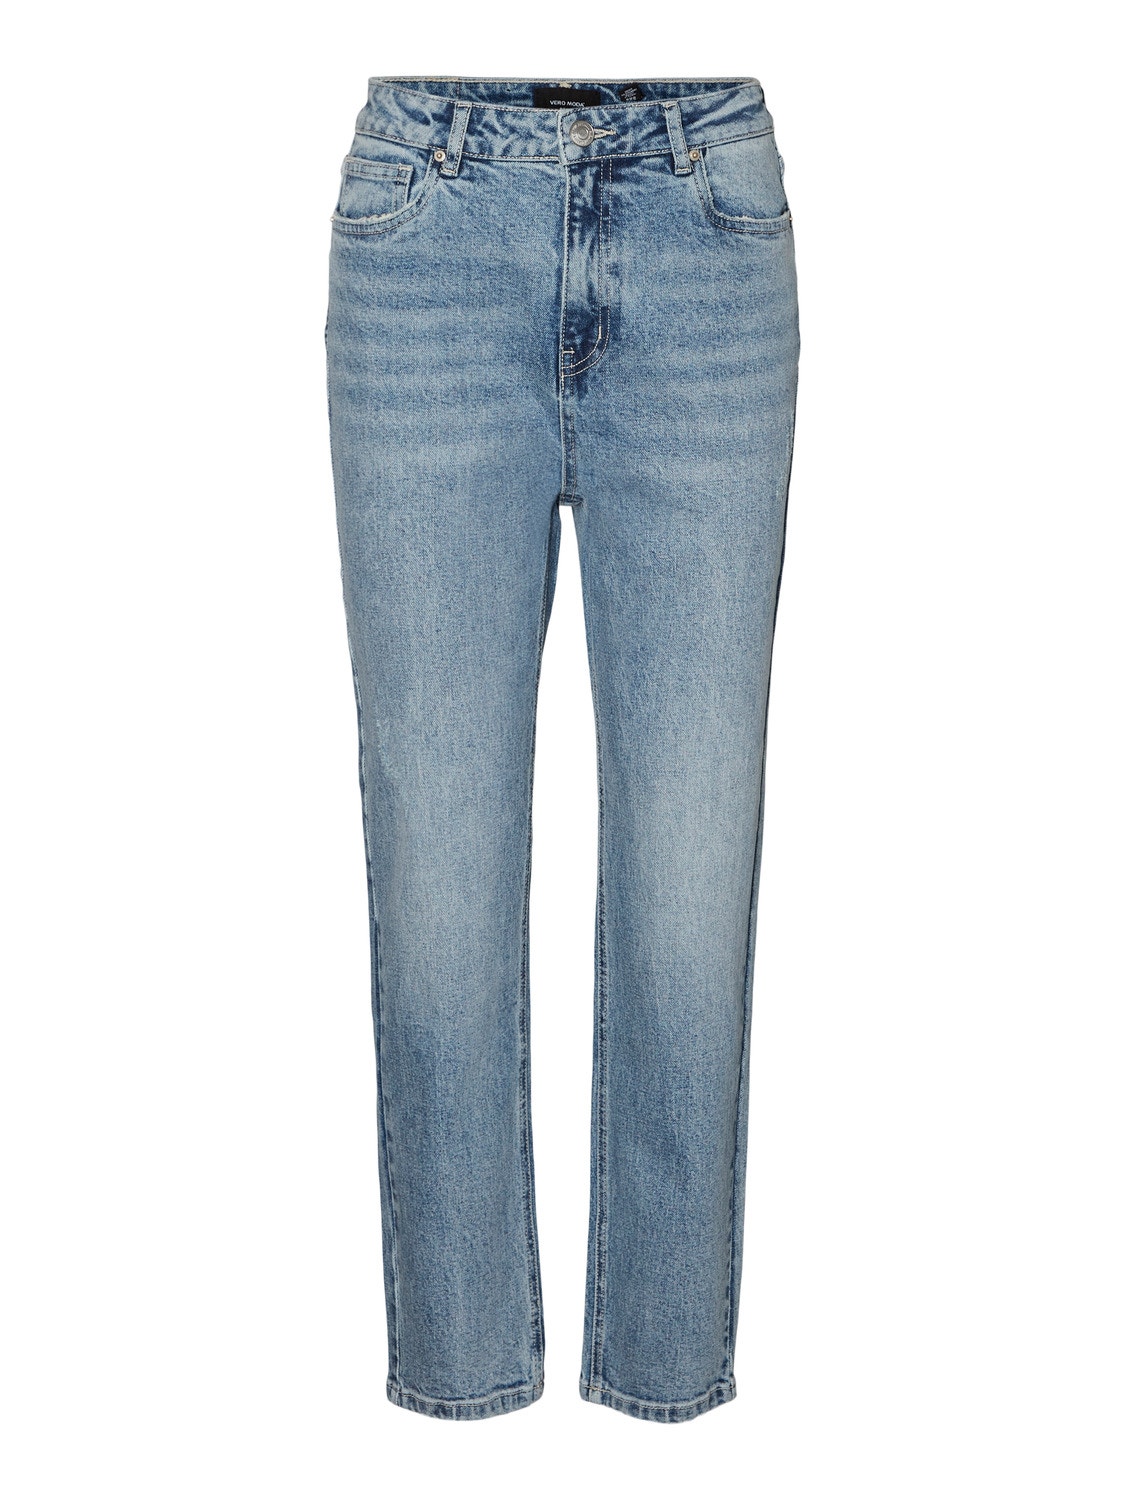 Vero Moda VMLINDA Krój mom Jeans -Light Blue Denim - 10291018